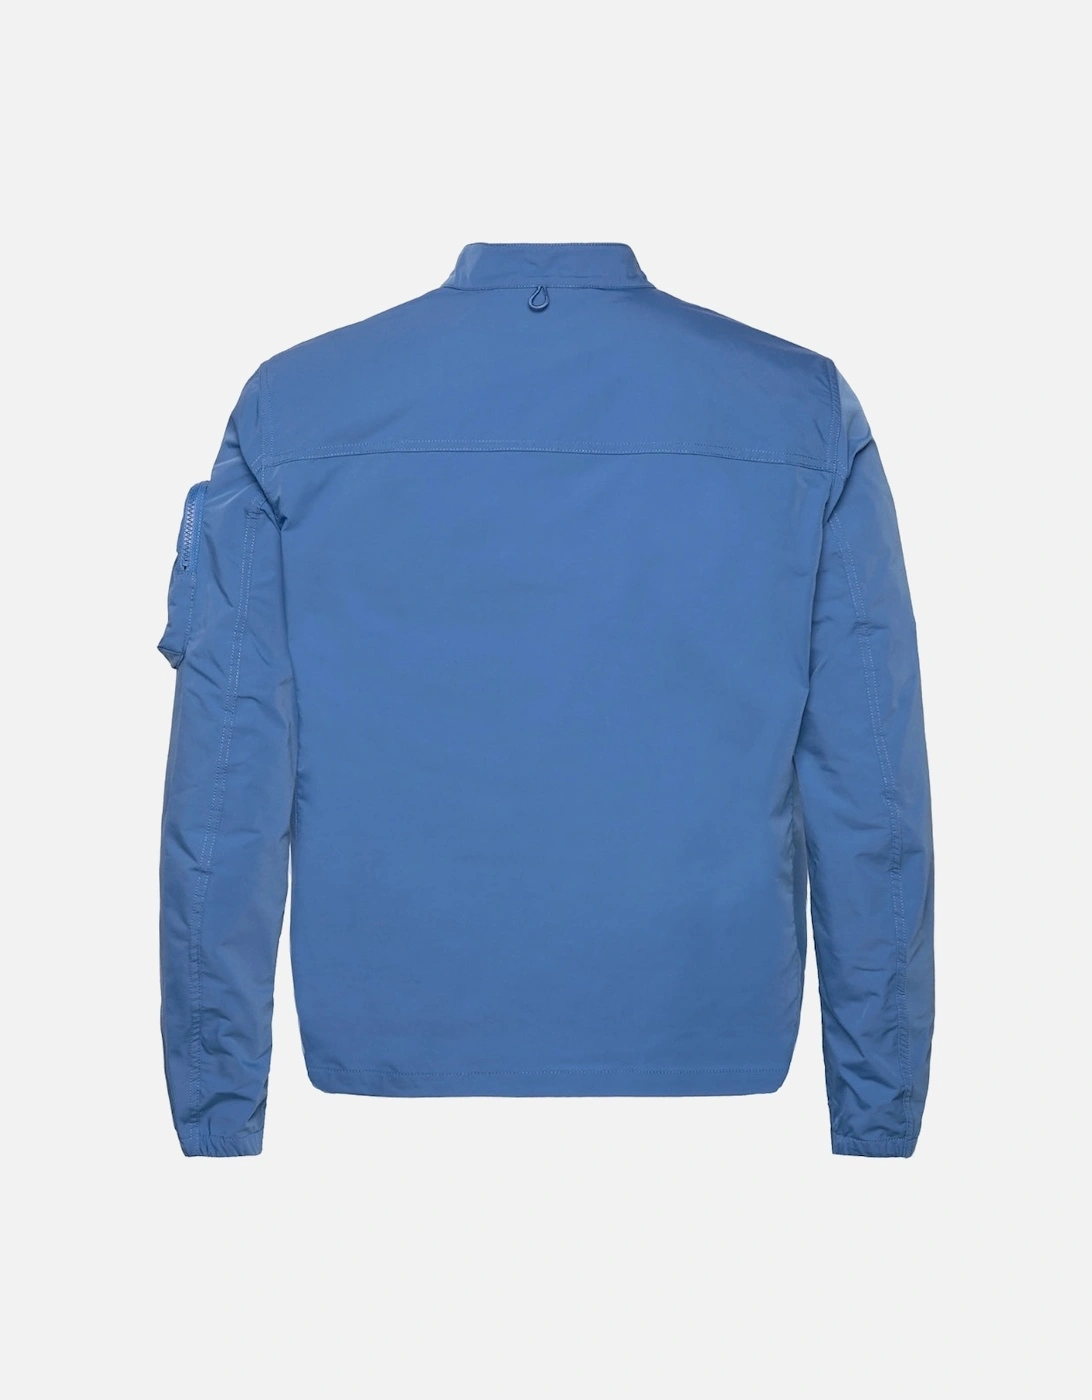 Beam Forward Blue Windbreaker Jacket